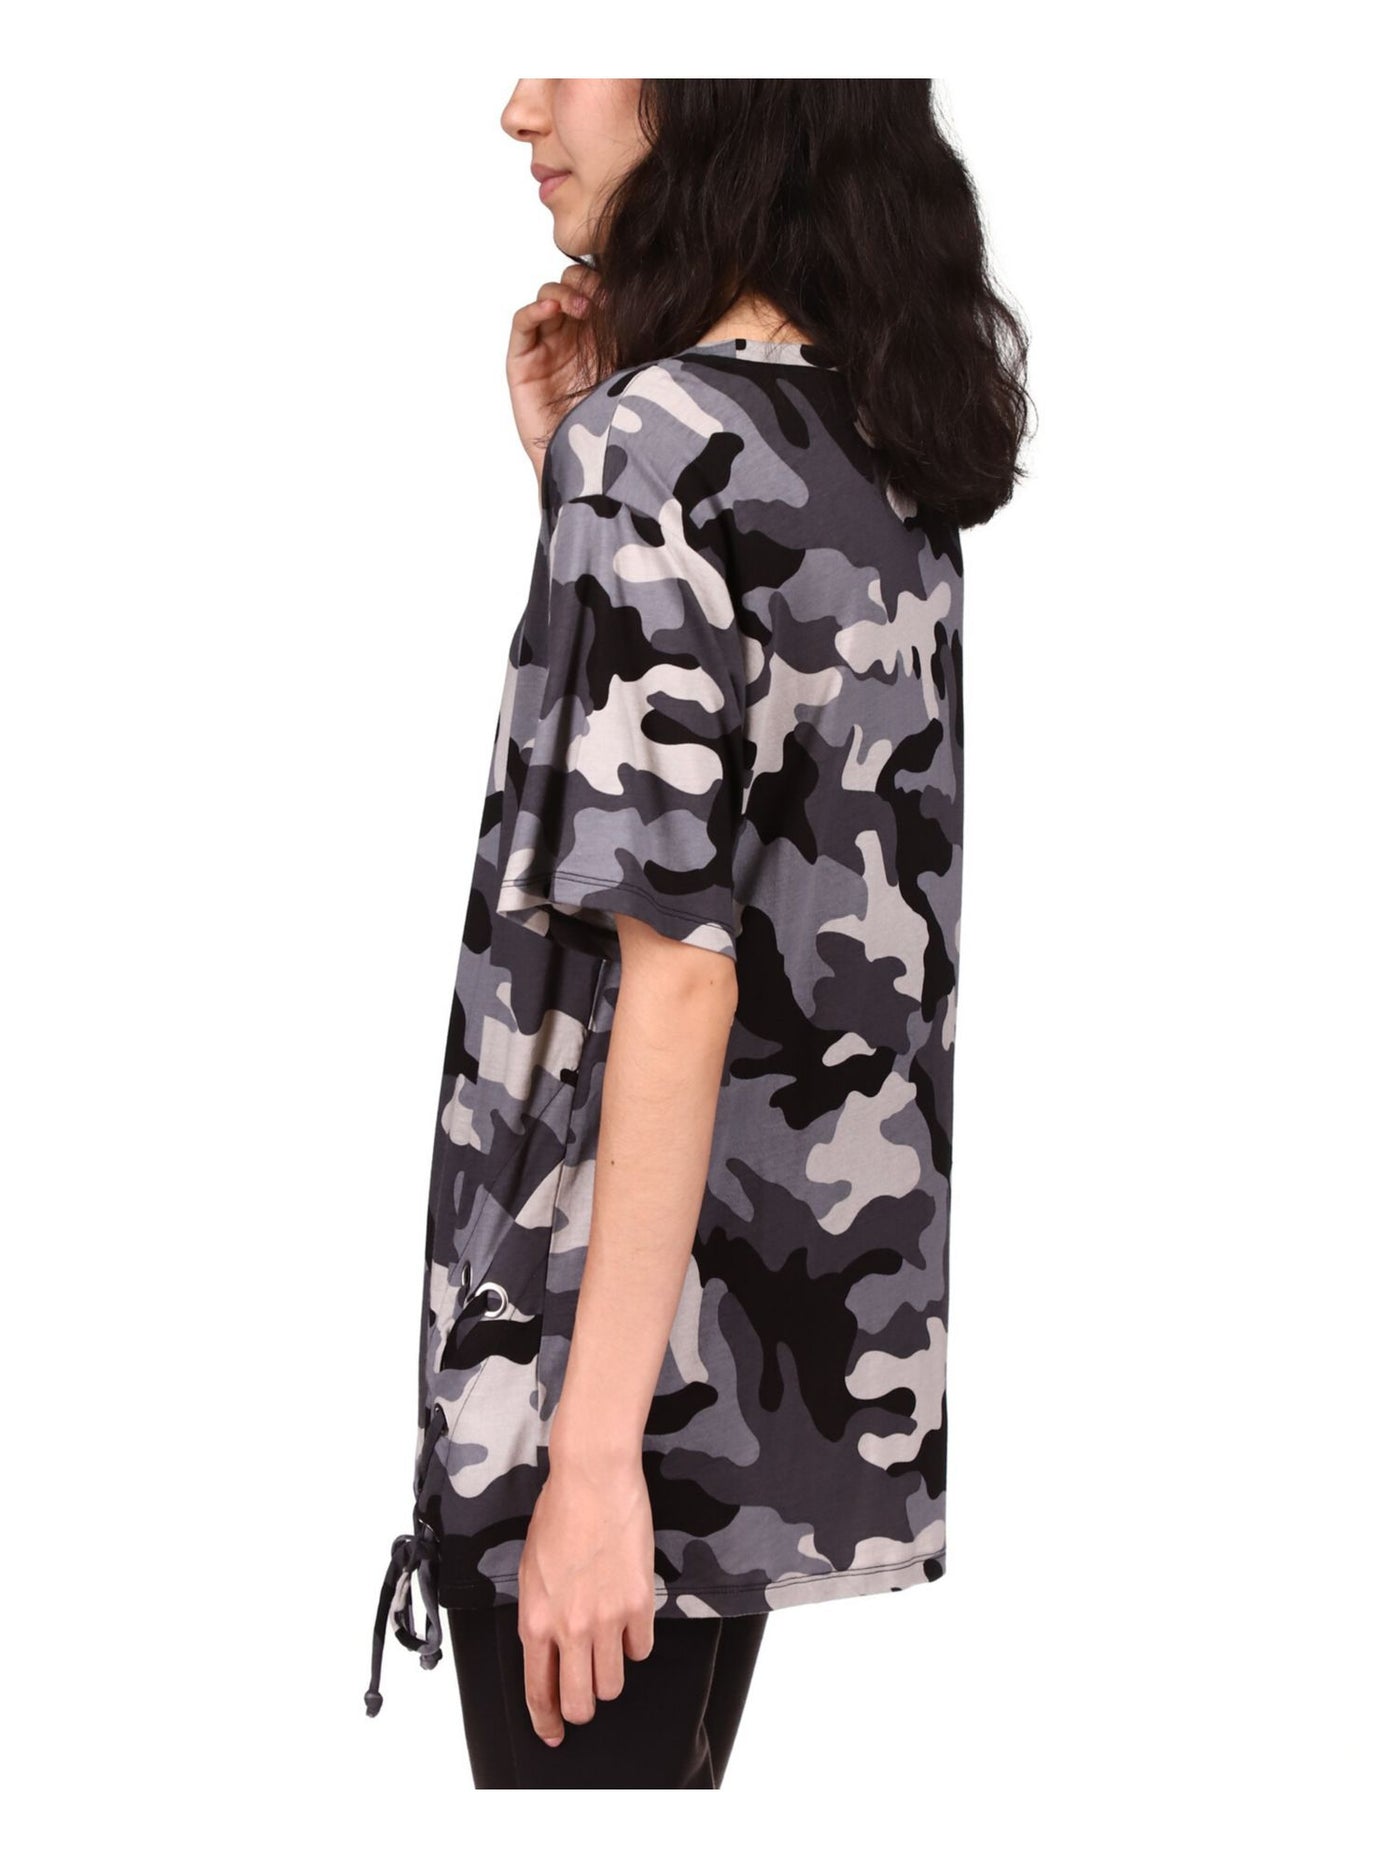 MICHAEL KORS Womens Gray Camouflage Elbow Sleeve Crew Neck Tunic Top M